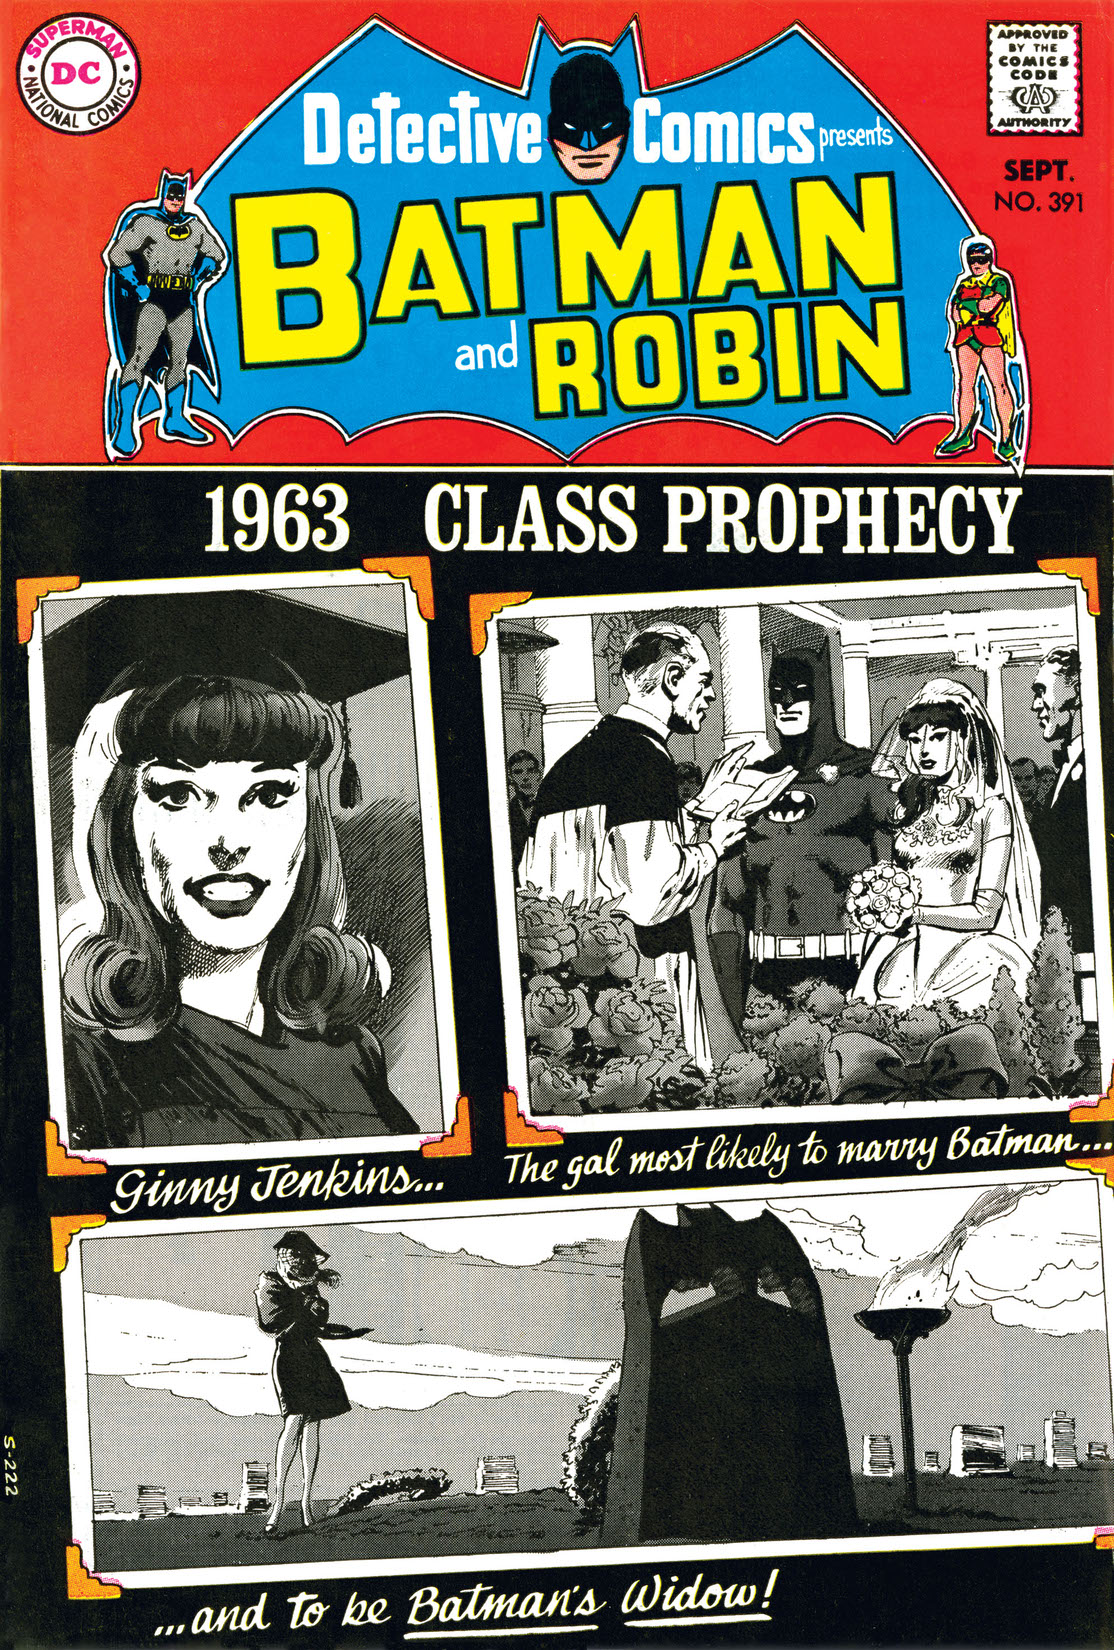 Detective Comics (1937-) #391 preview images